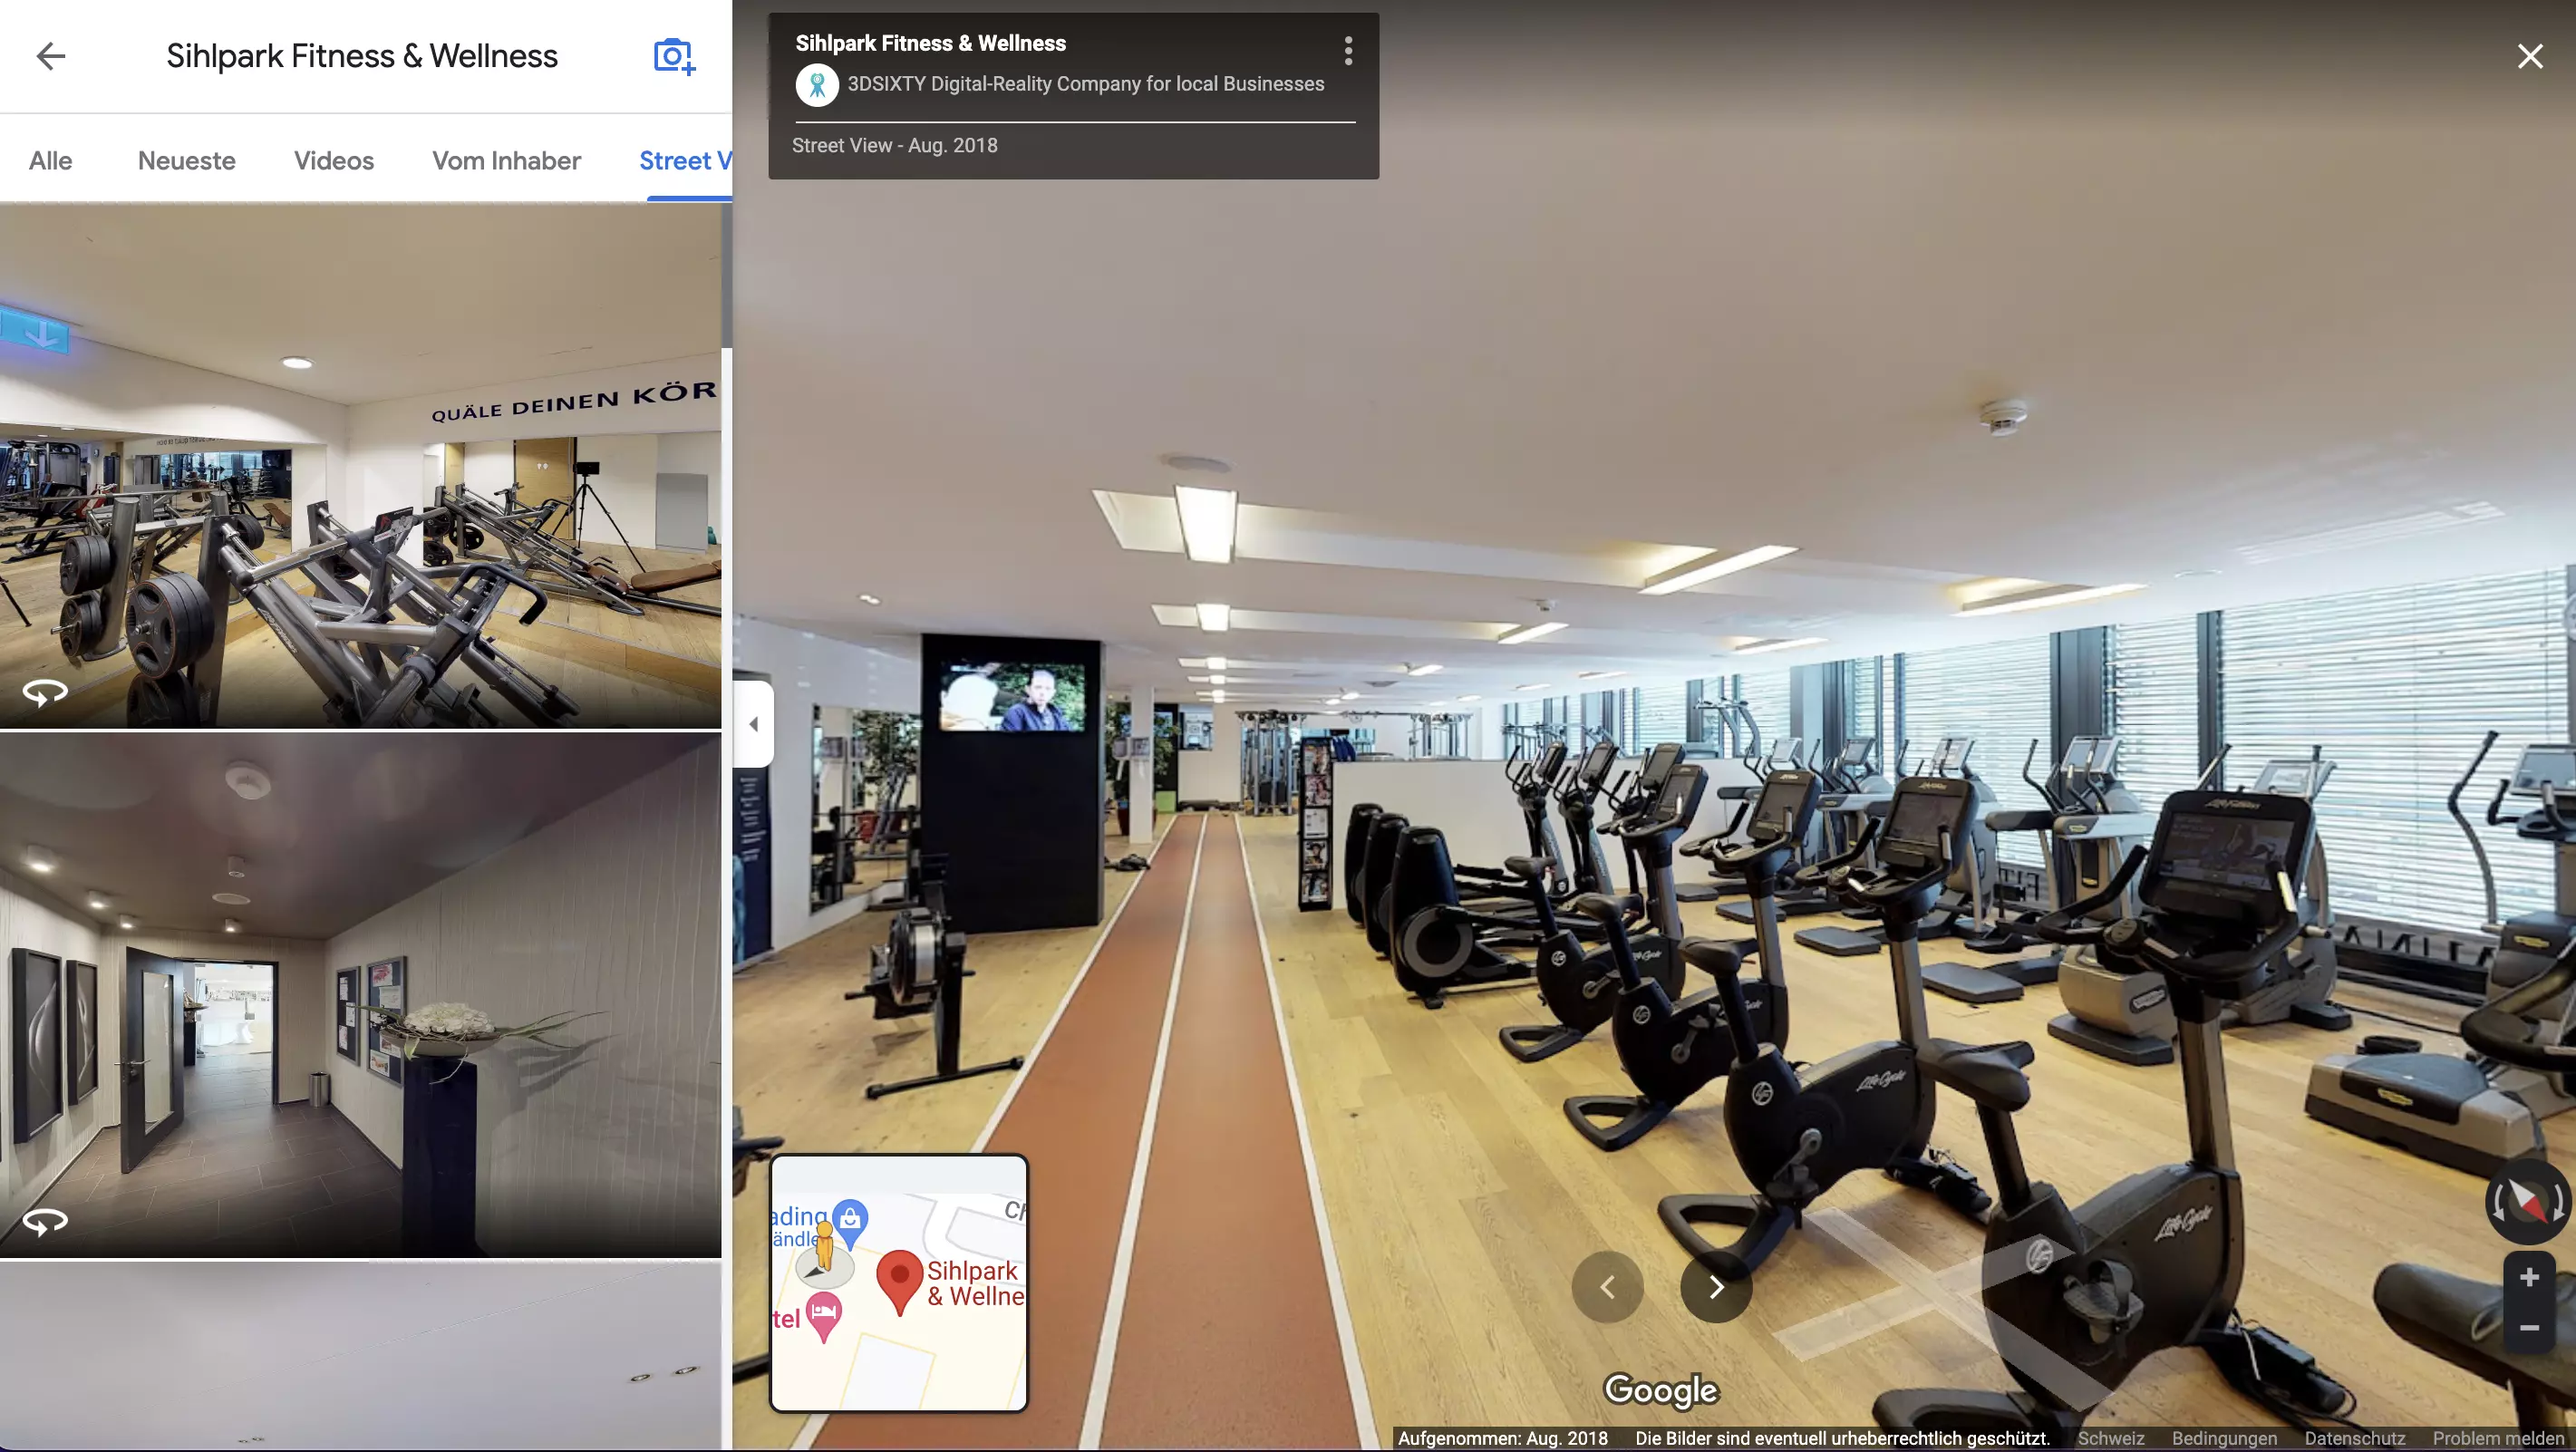 Sihlpart Fitness und Wellness - Google Street View Tour